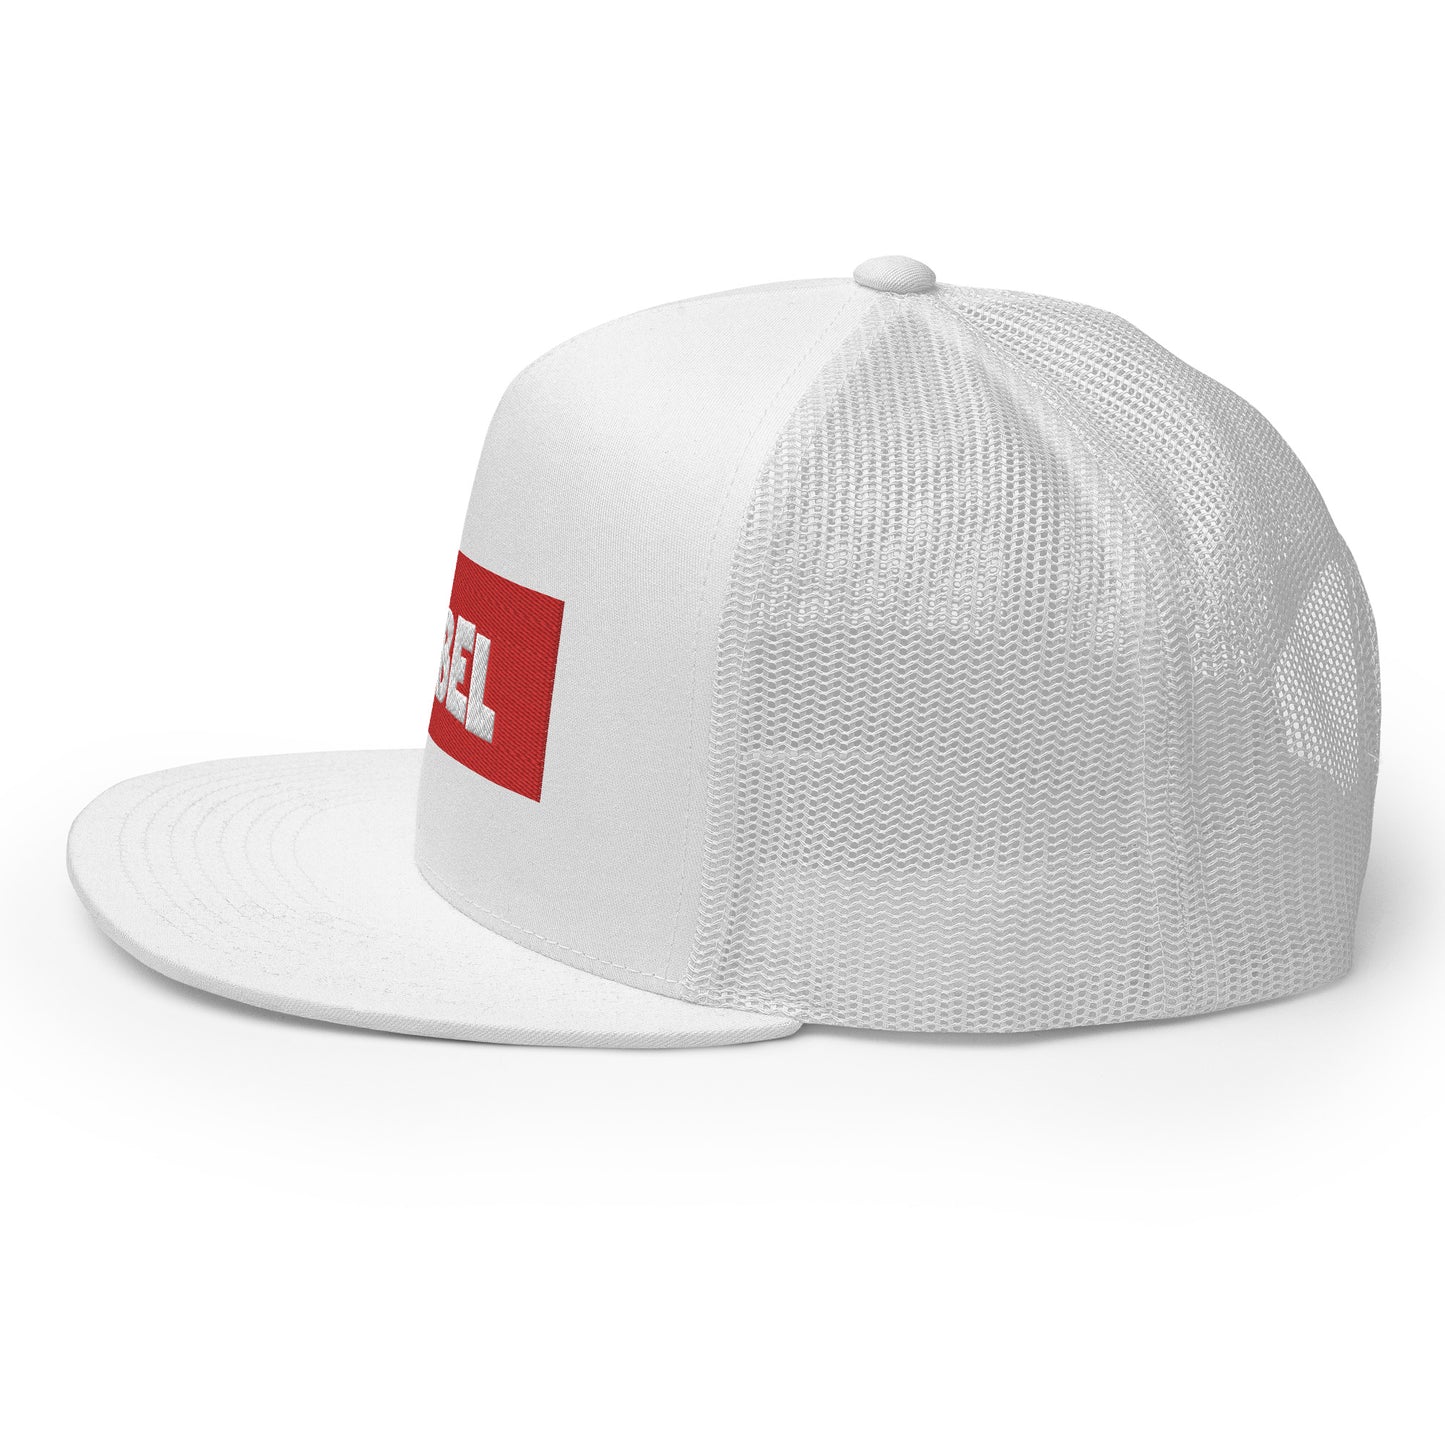 Ubel Brand / #01 / Hat / Red Box Logo / Trucker Cap